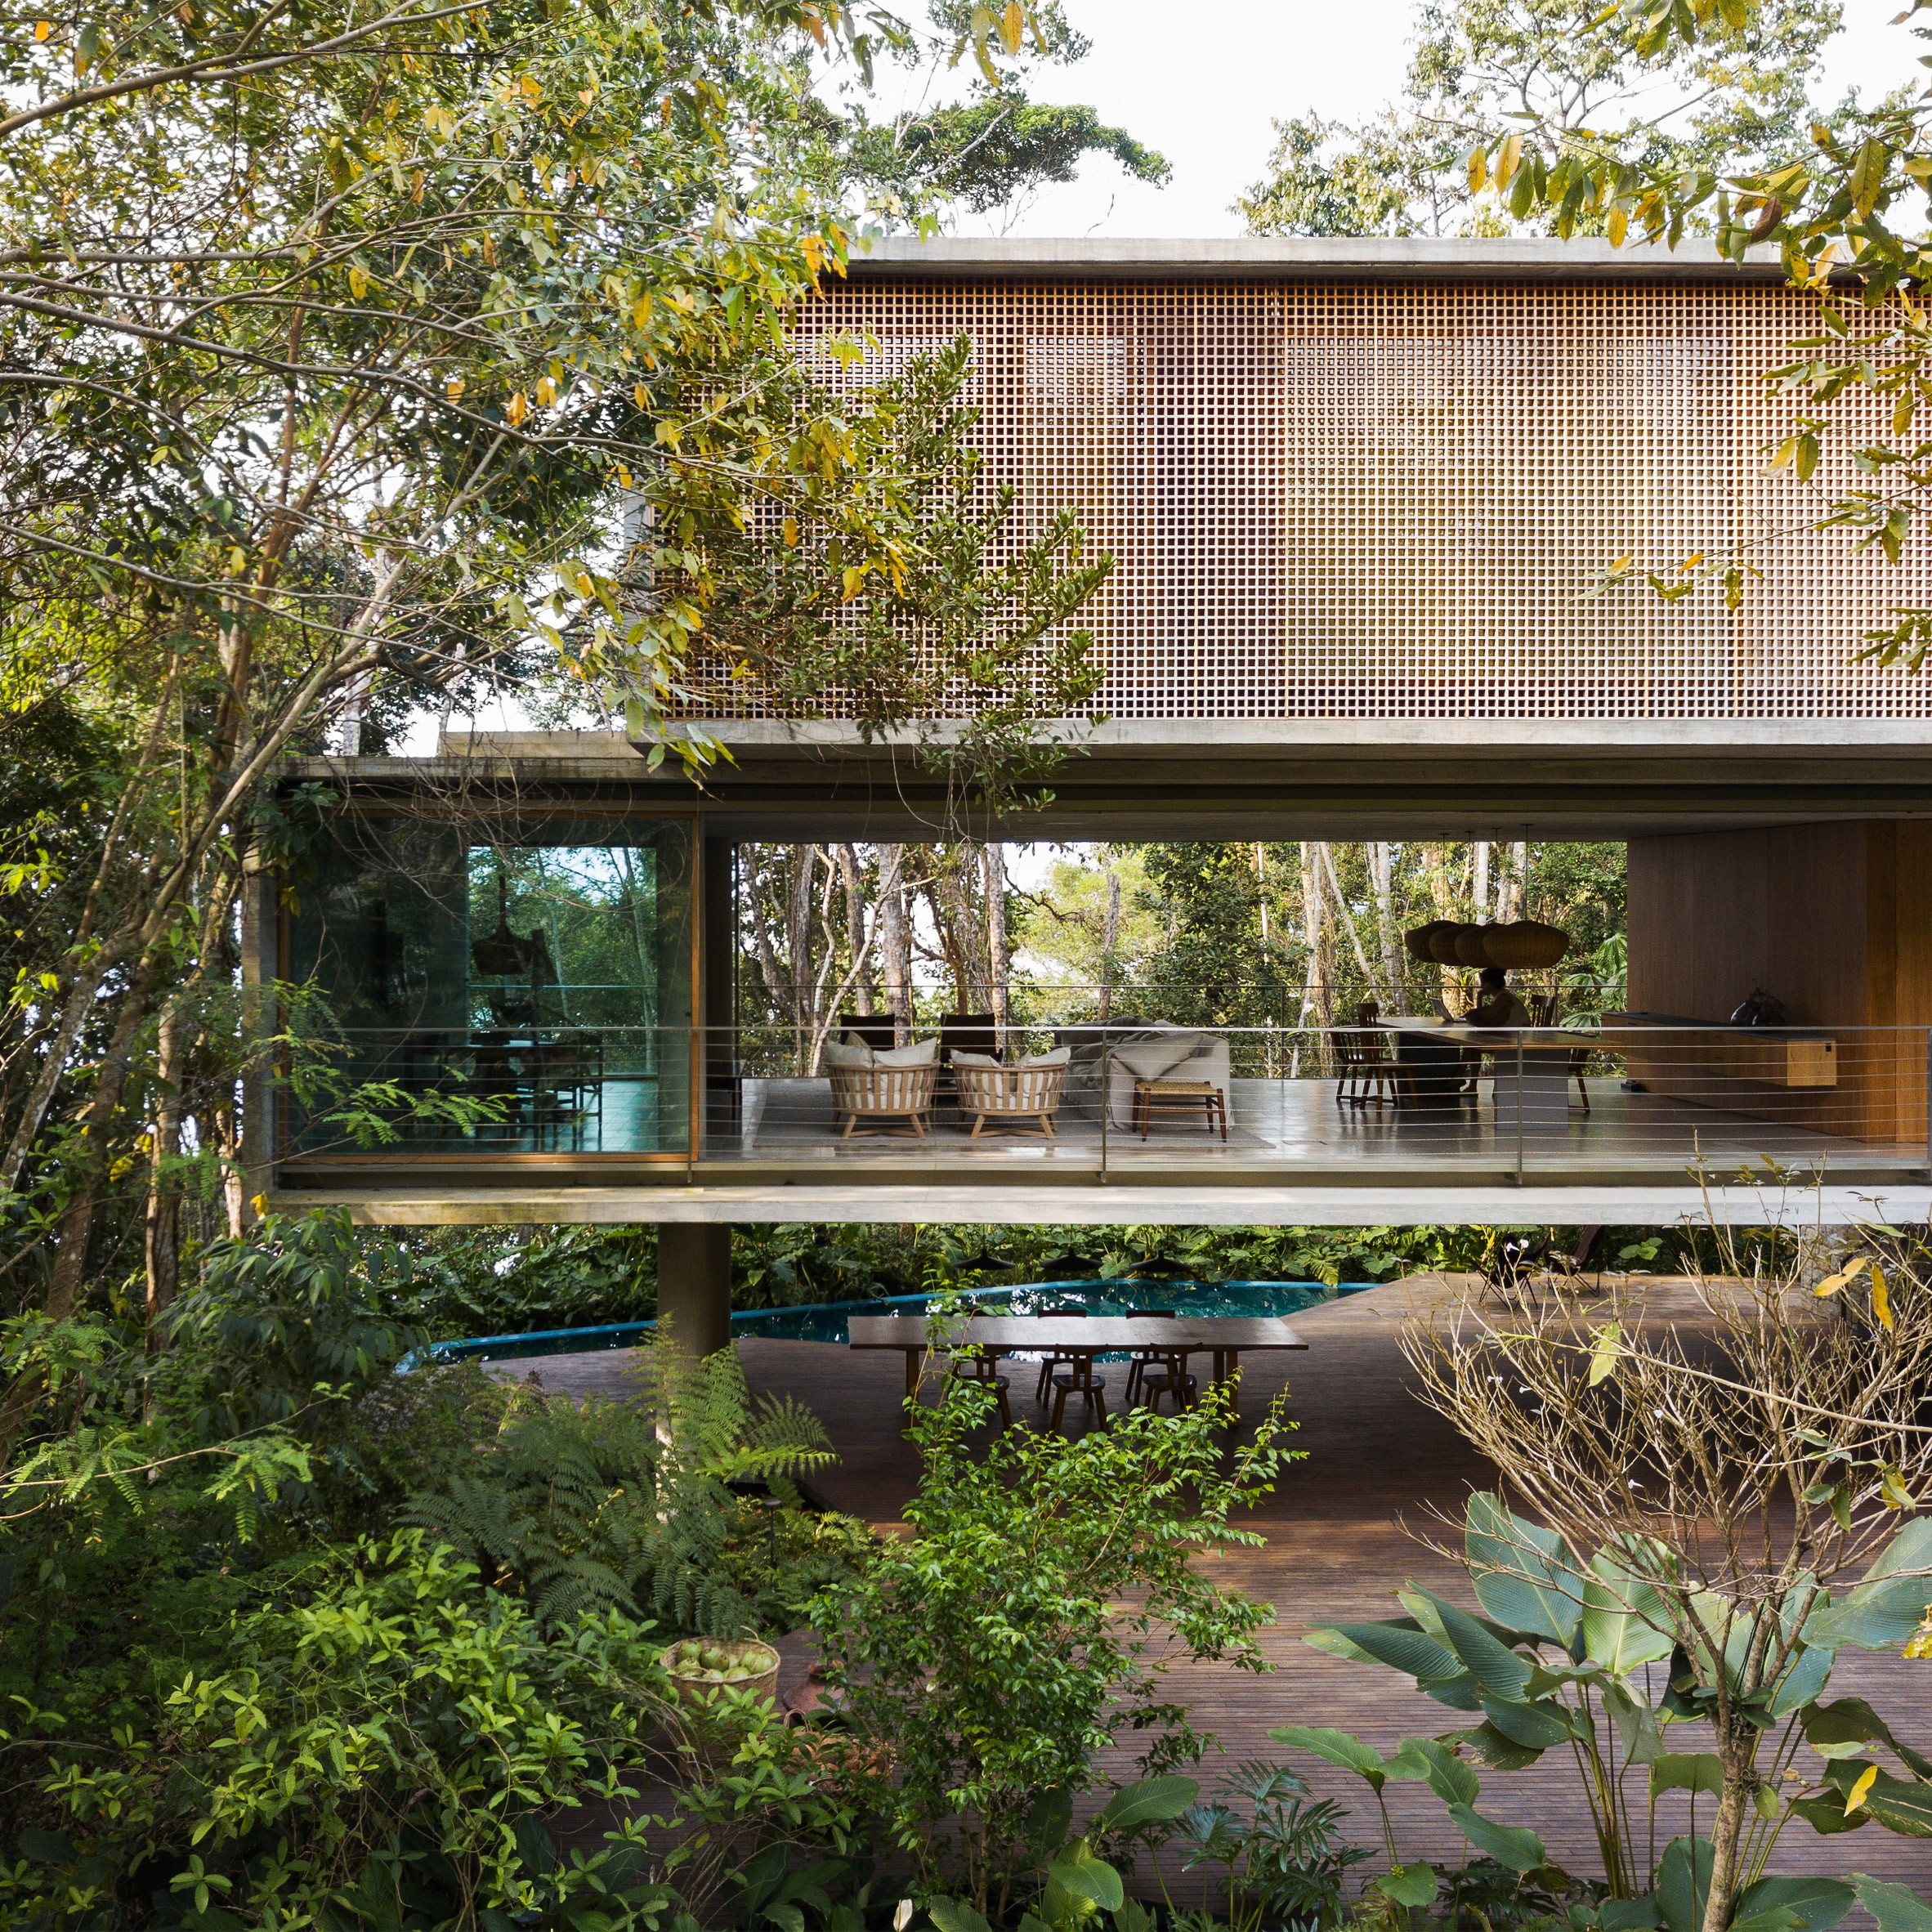 Studio MK27 raises house on concrete pilotis in the Brazilian rainforest pic